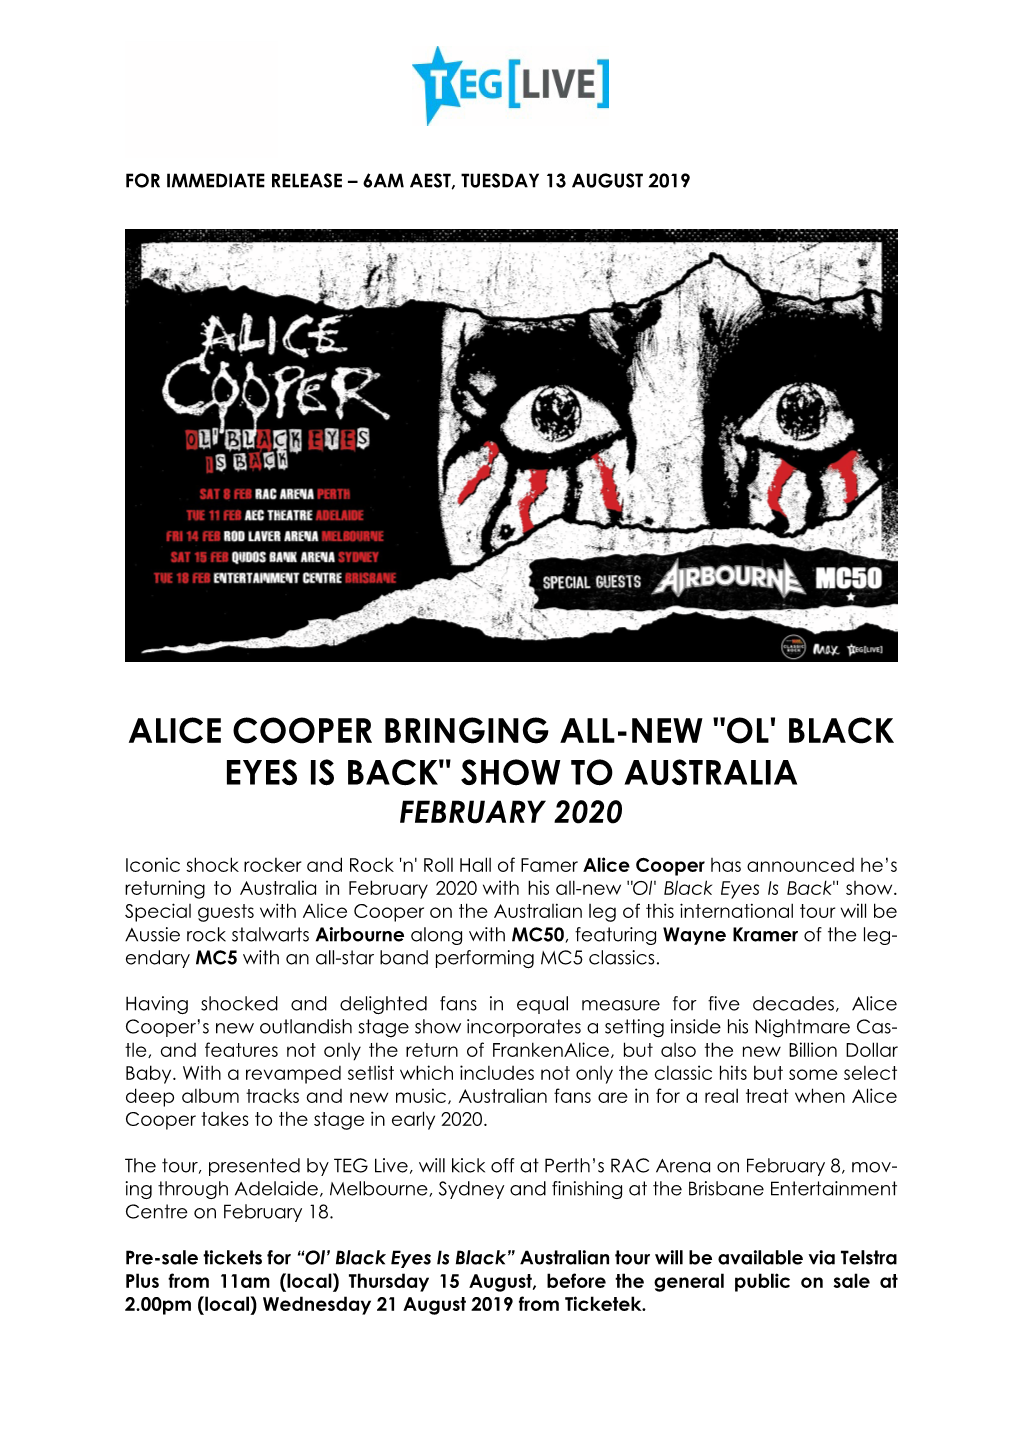 Alice Cooper Bringing All-New "Ol' Black Eyes Is Back" Show to Australia February 2020